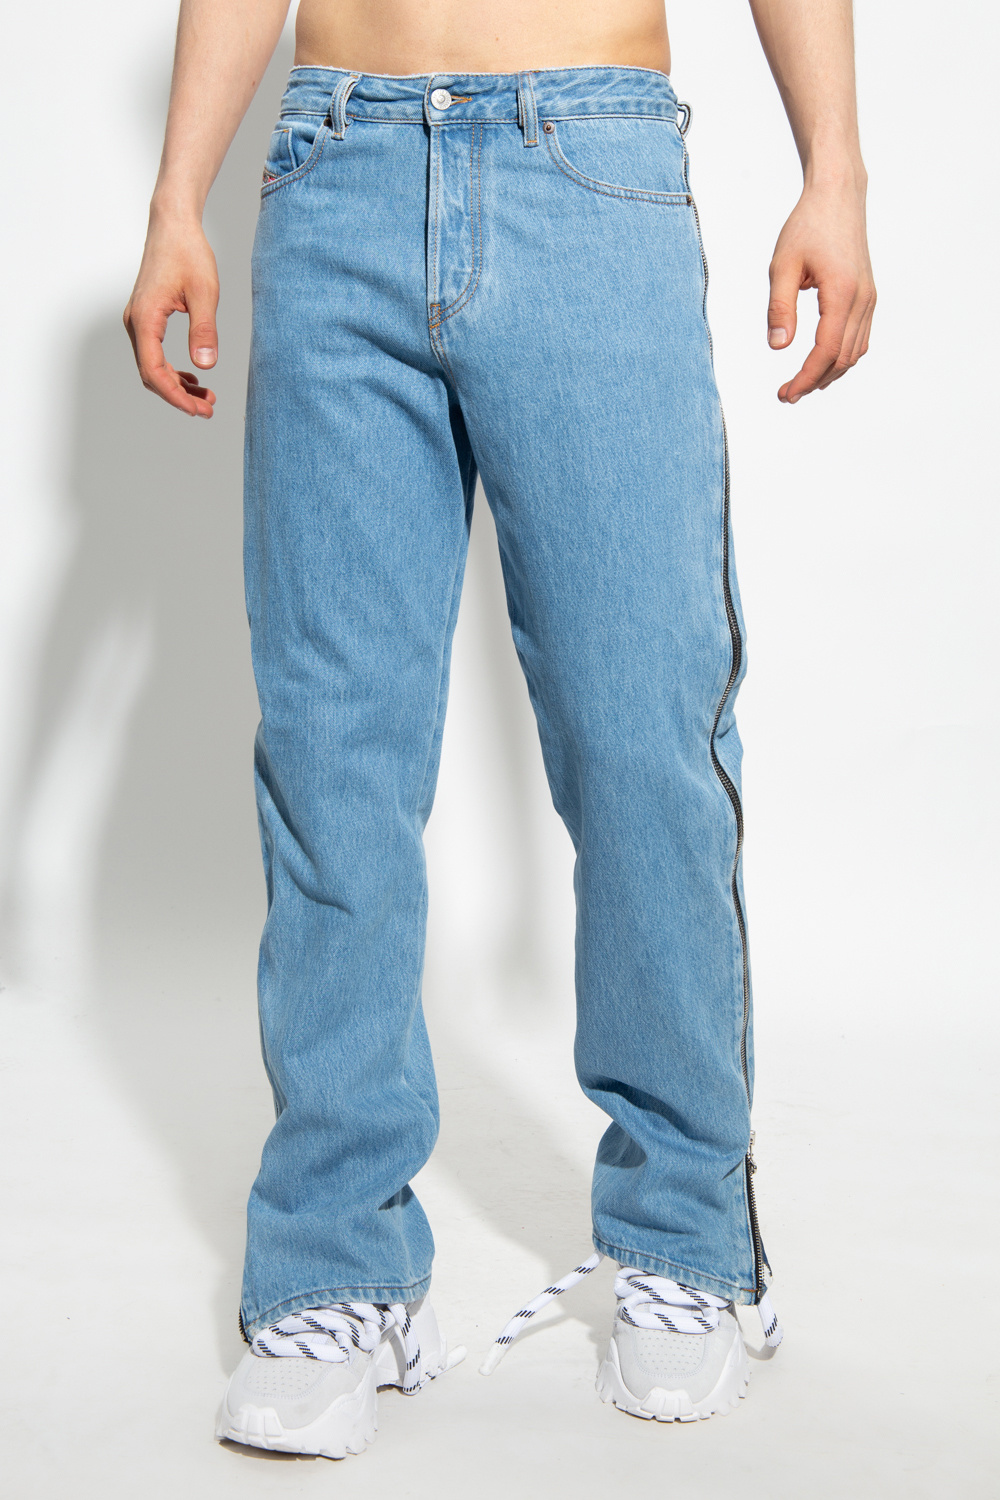 Diesel ‘1955’ jeans with side stripes